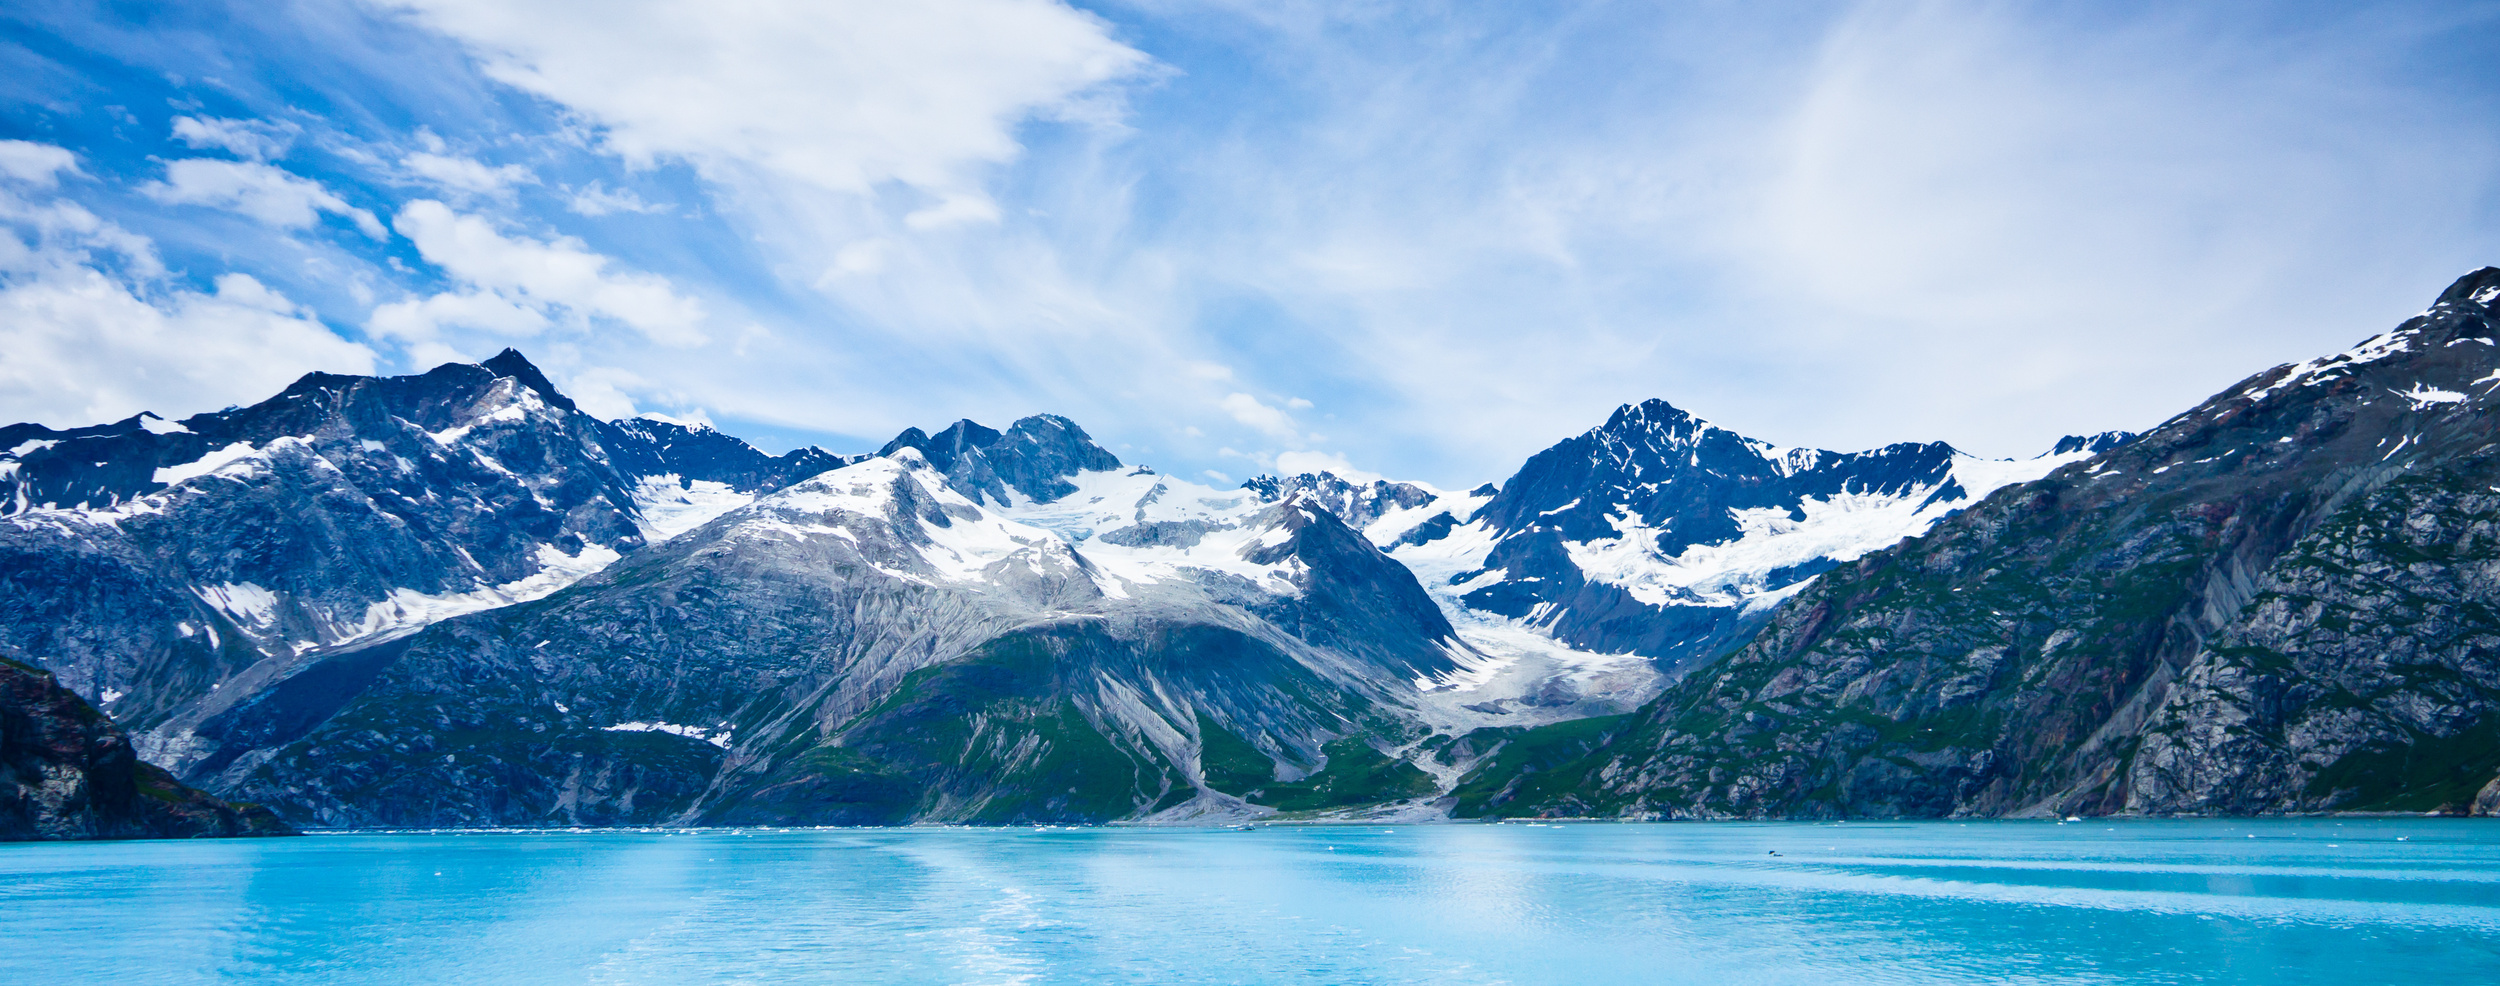 Le glacier Bay, en Alaska. © MF, Adobe Stock